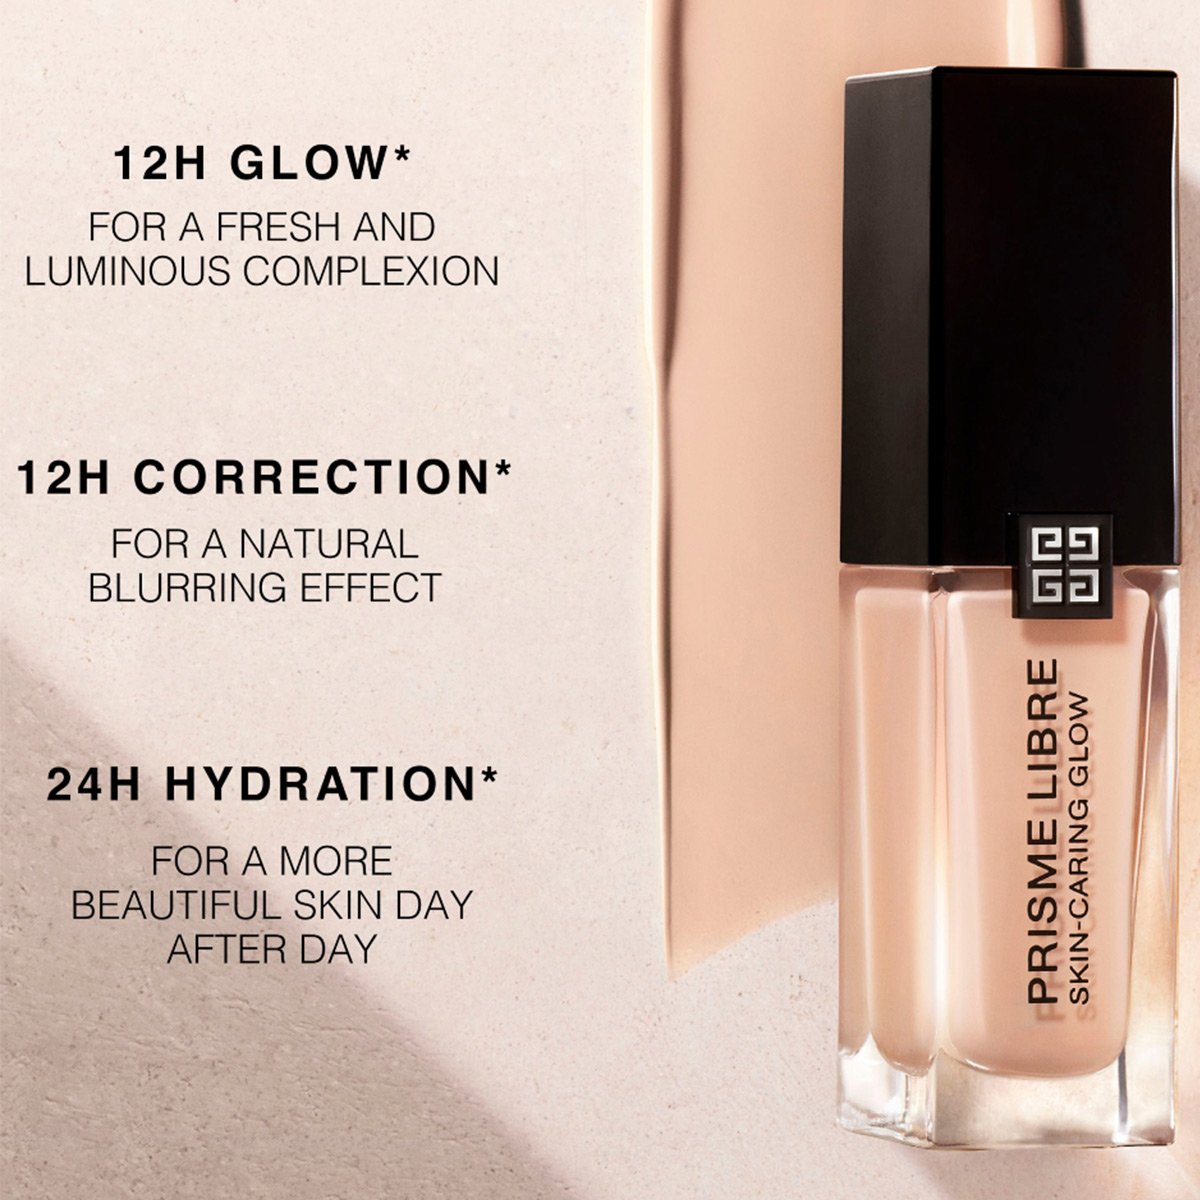 Base de Maquillaje con Tratamiento Givenchy Prisme Libre Skin-Caring Glow, 30 Ml Tono 3-C275